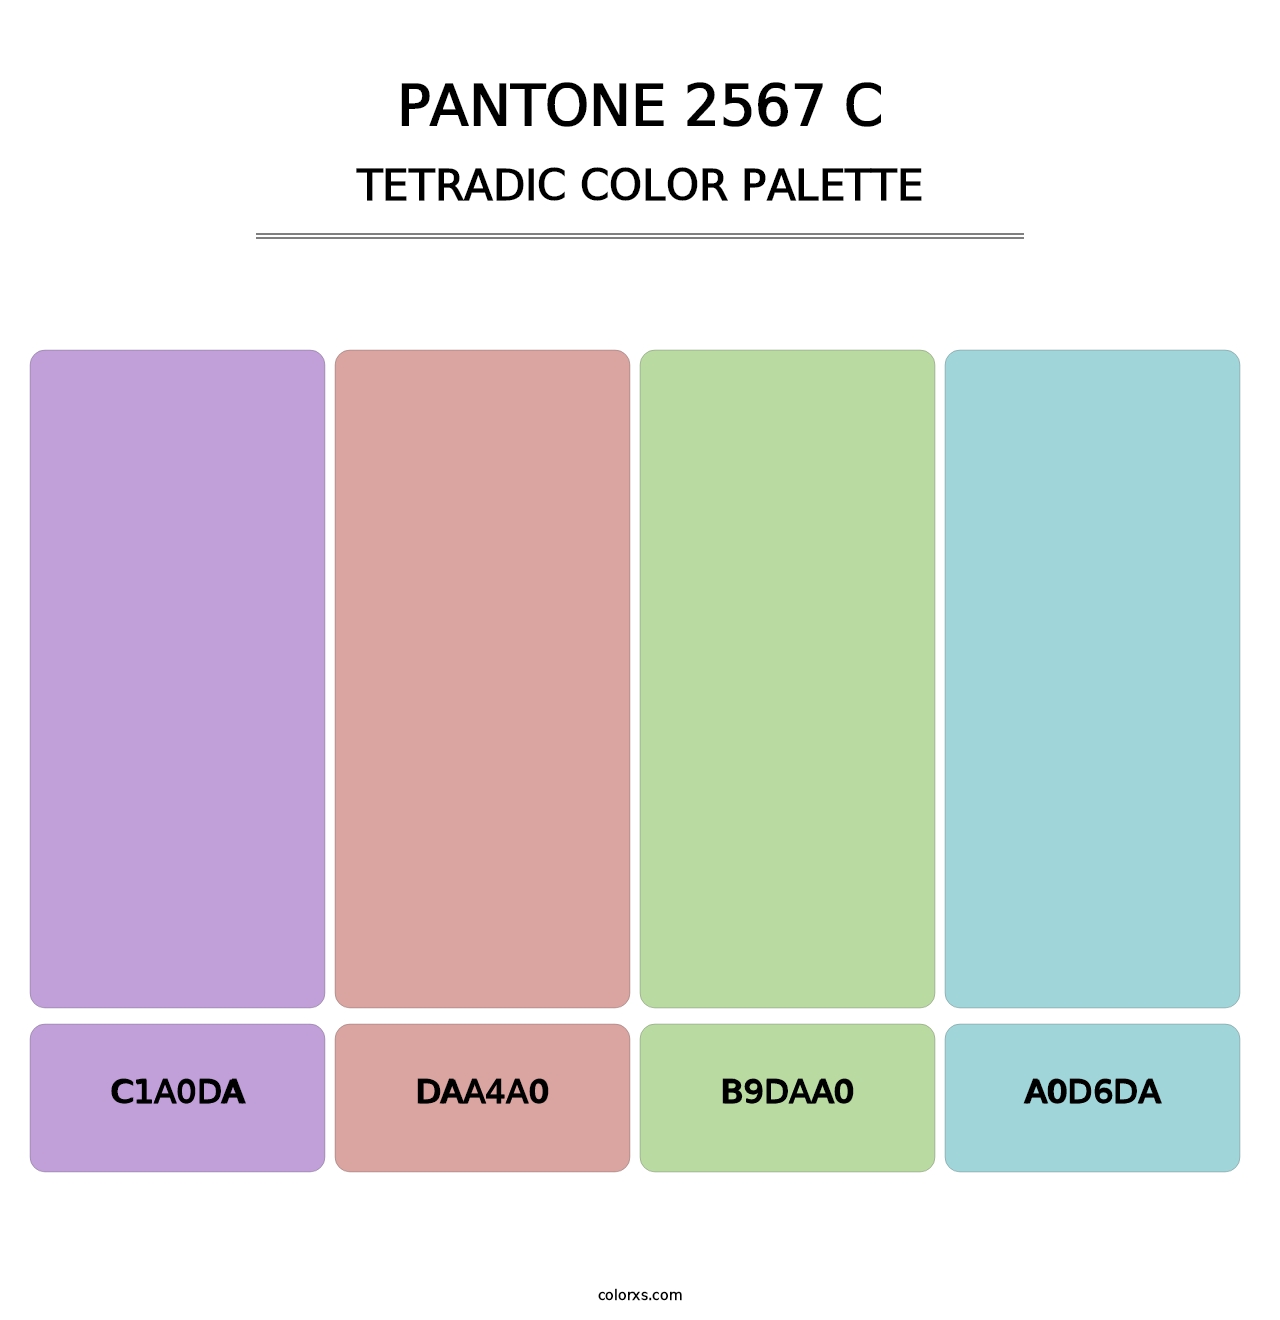 PANTONE 2567 C - Tetradic Color Palette